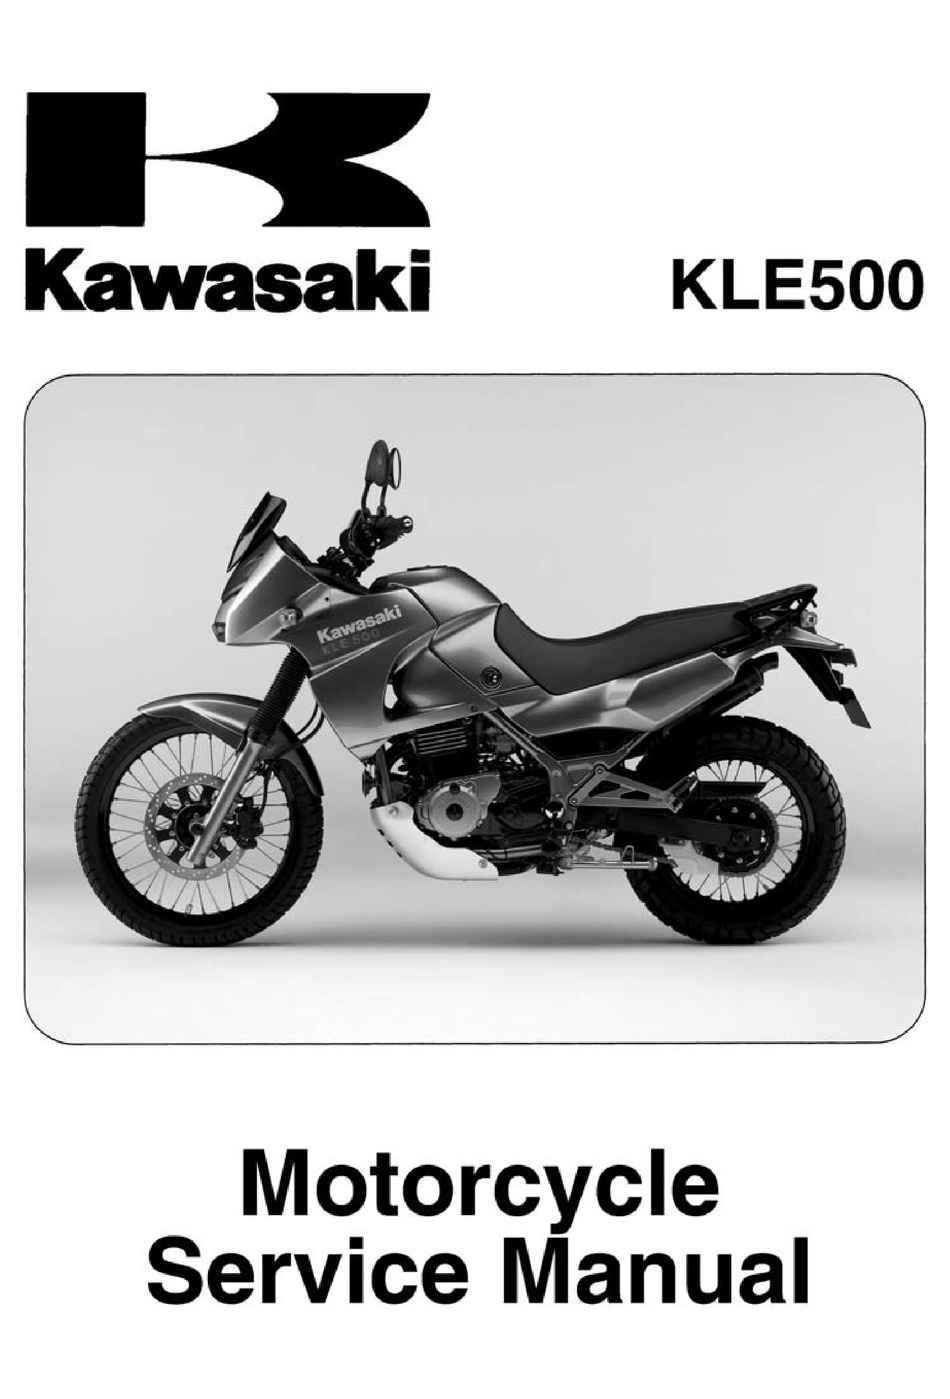 KAWASAKI KLE500 Pdf | ManualsLib